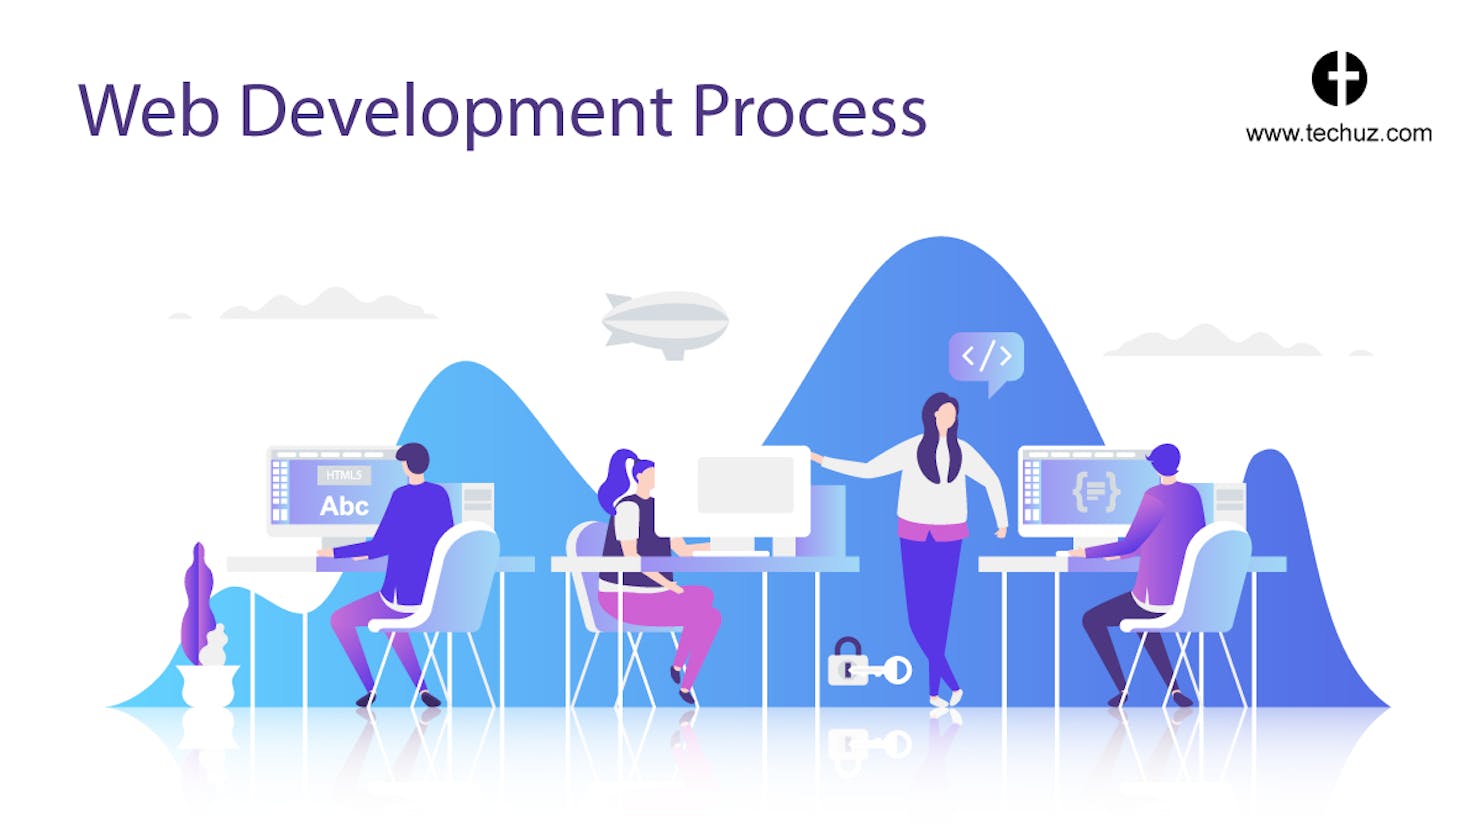 7 Steps of Web Development Process